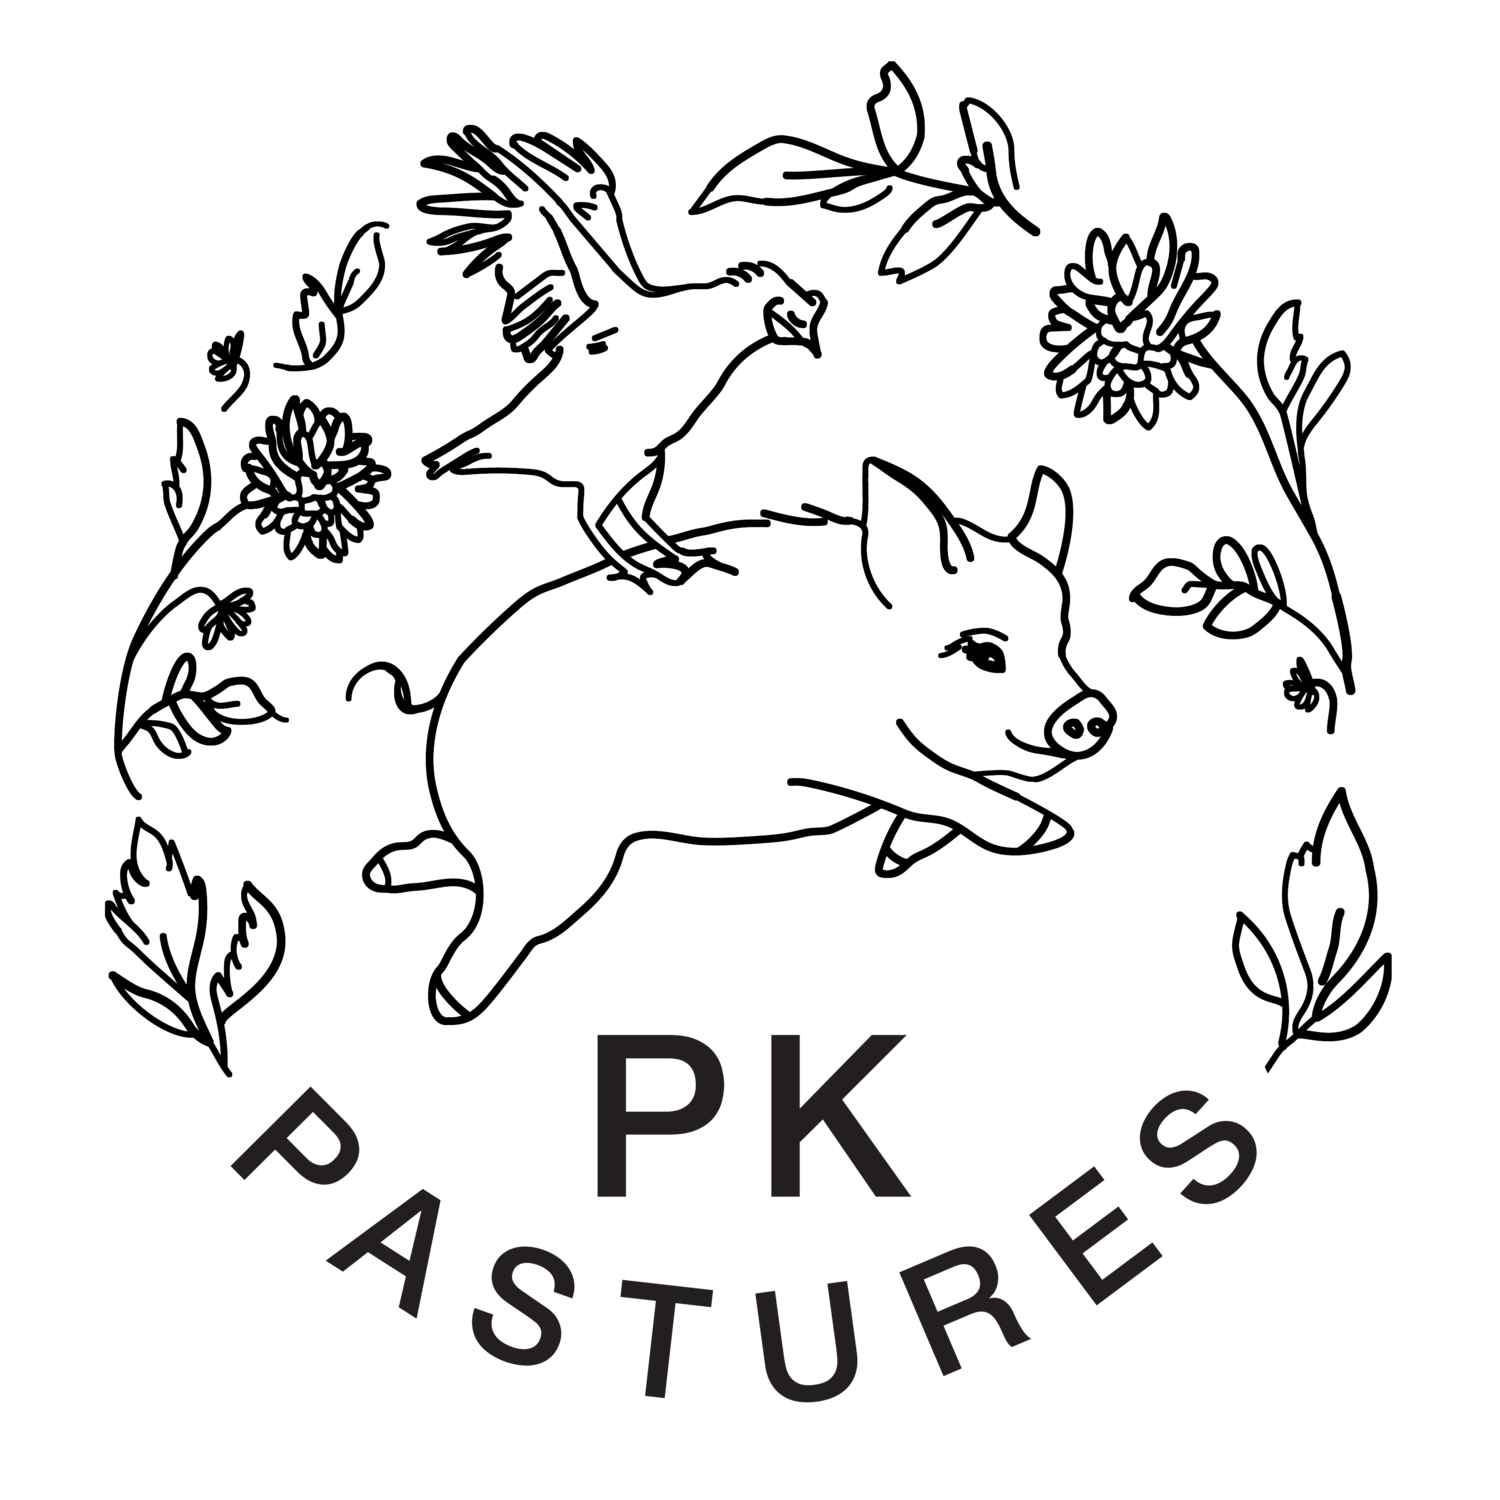 PK Pastures